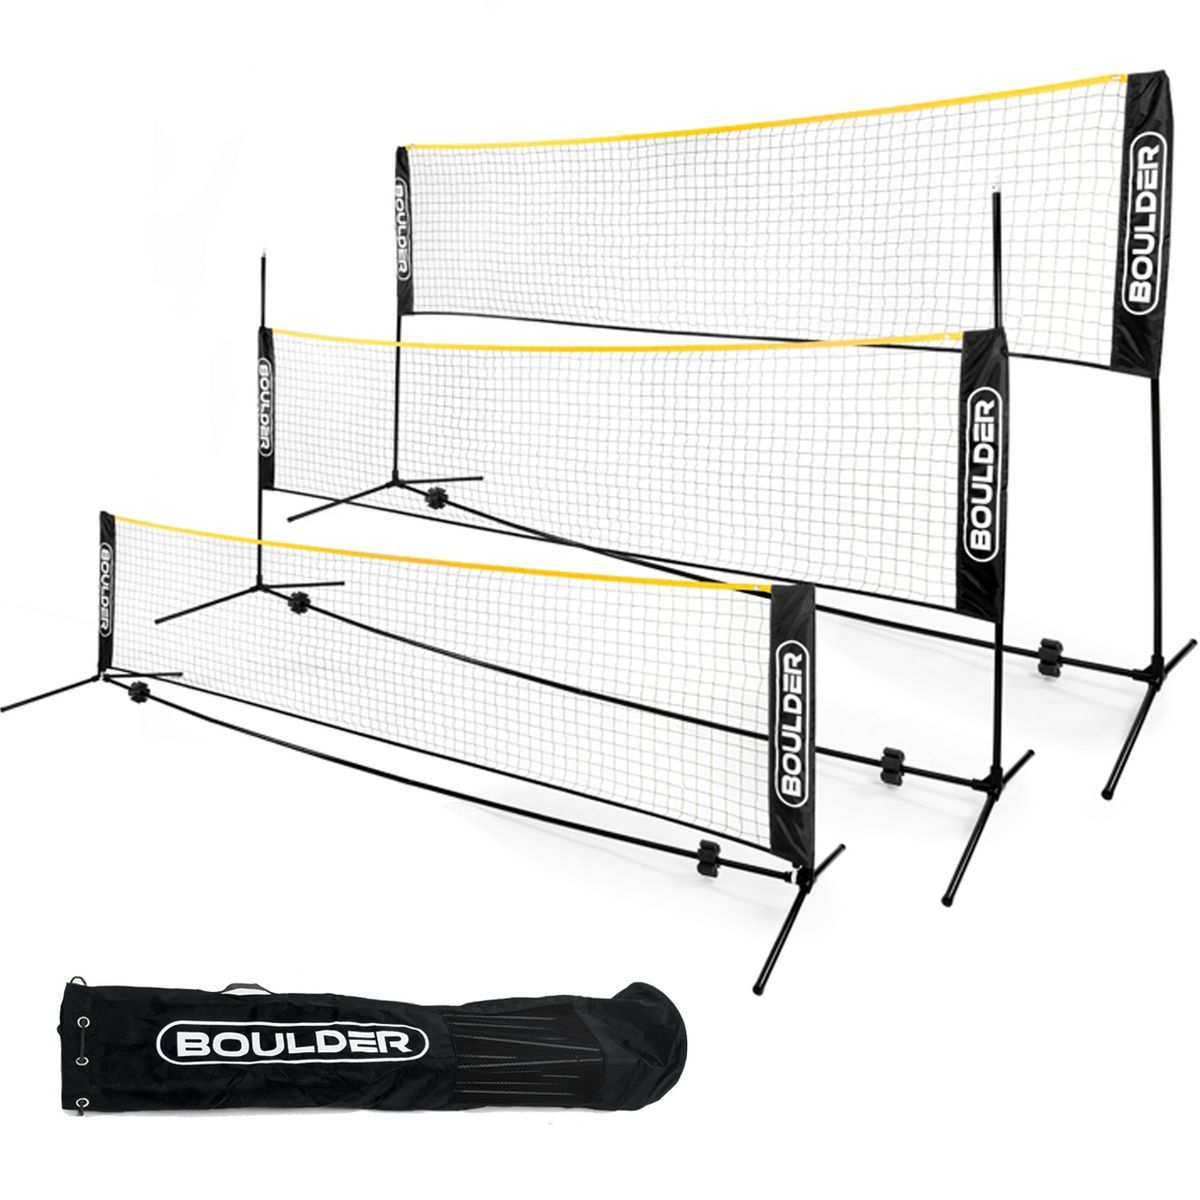 Boulder Badminton Height-Adjustable Portable Net | Target